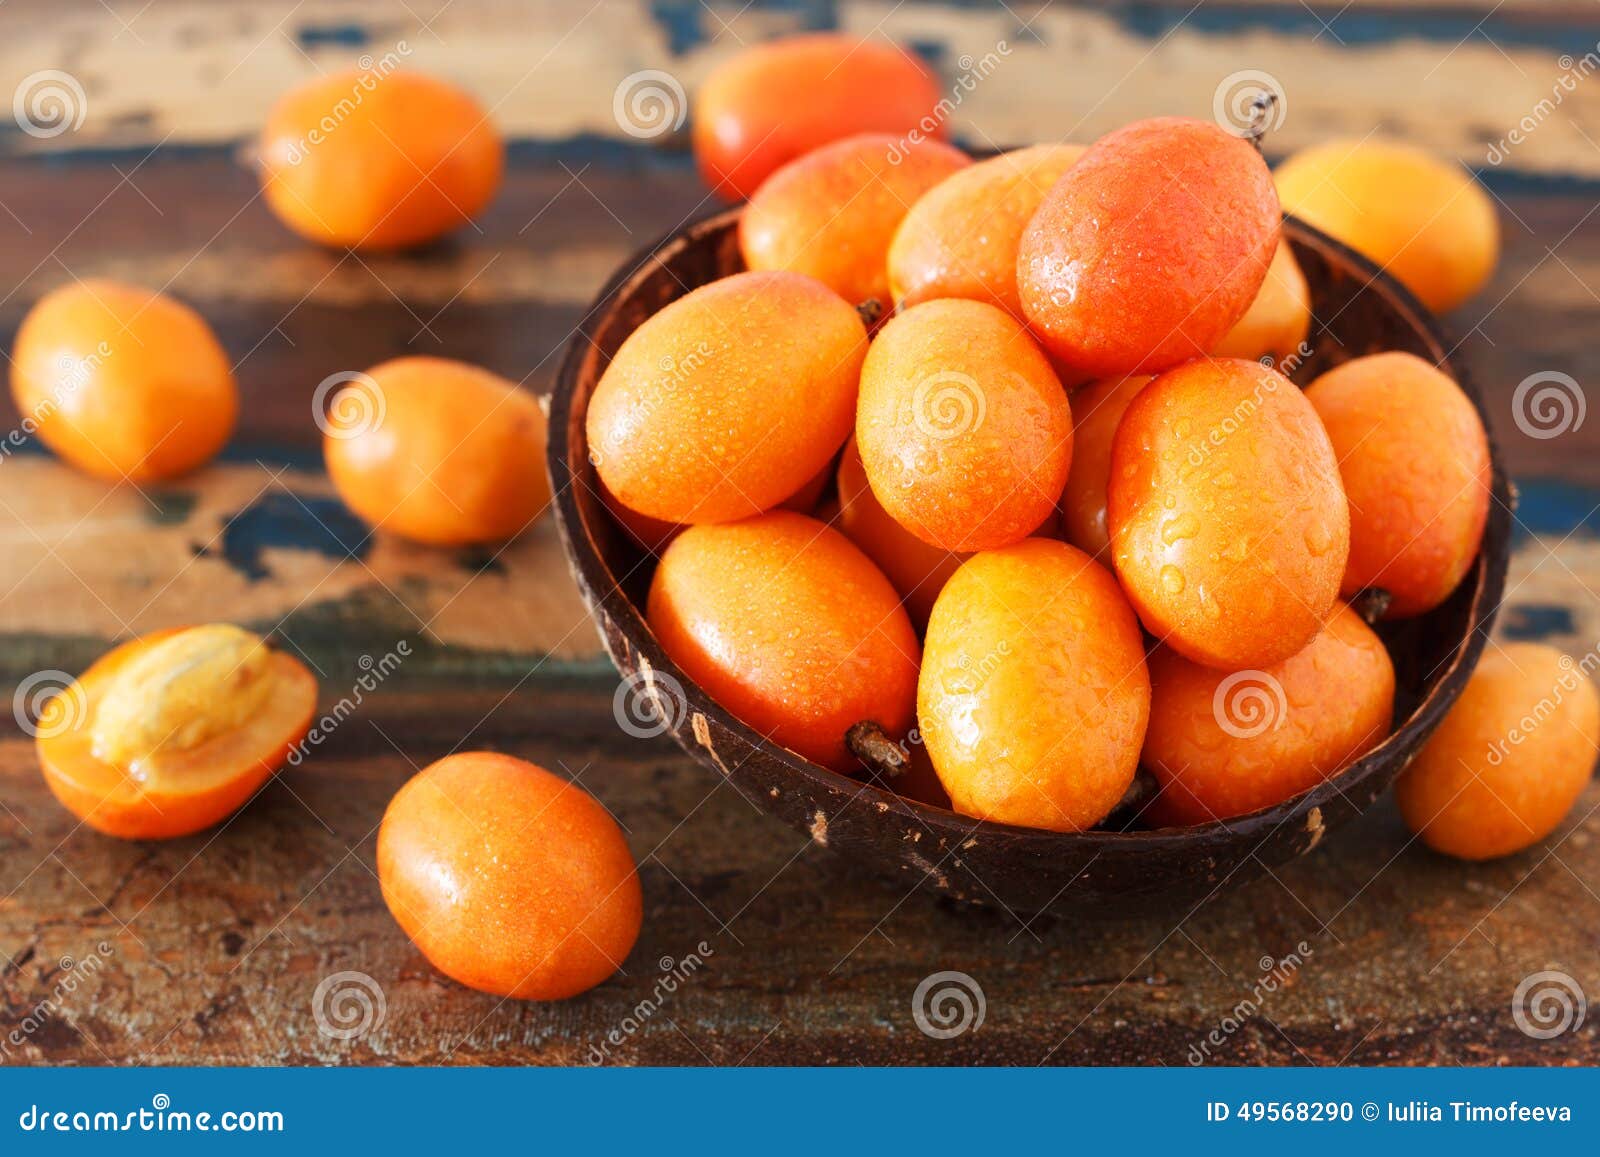 fruit jocote (red mombin, purple mombin, hog plum, ciruela huesito, sineguela, siriguela) in bowl